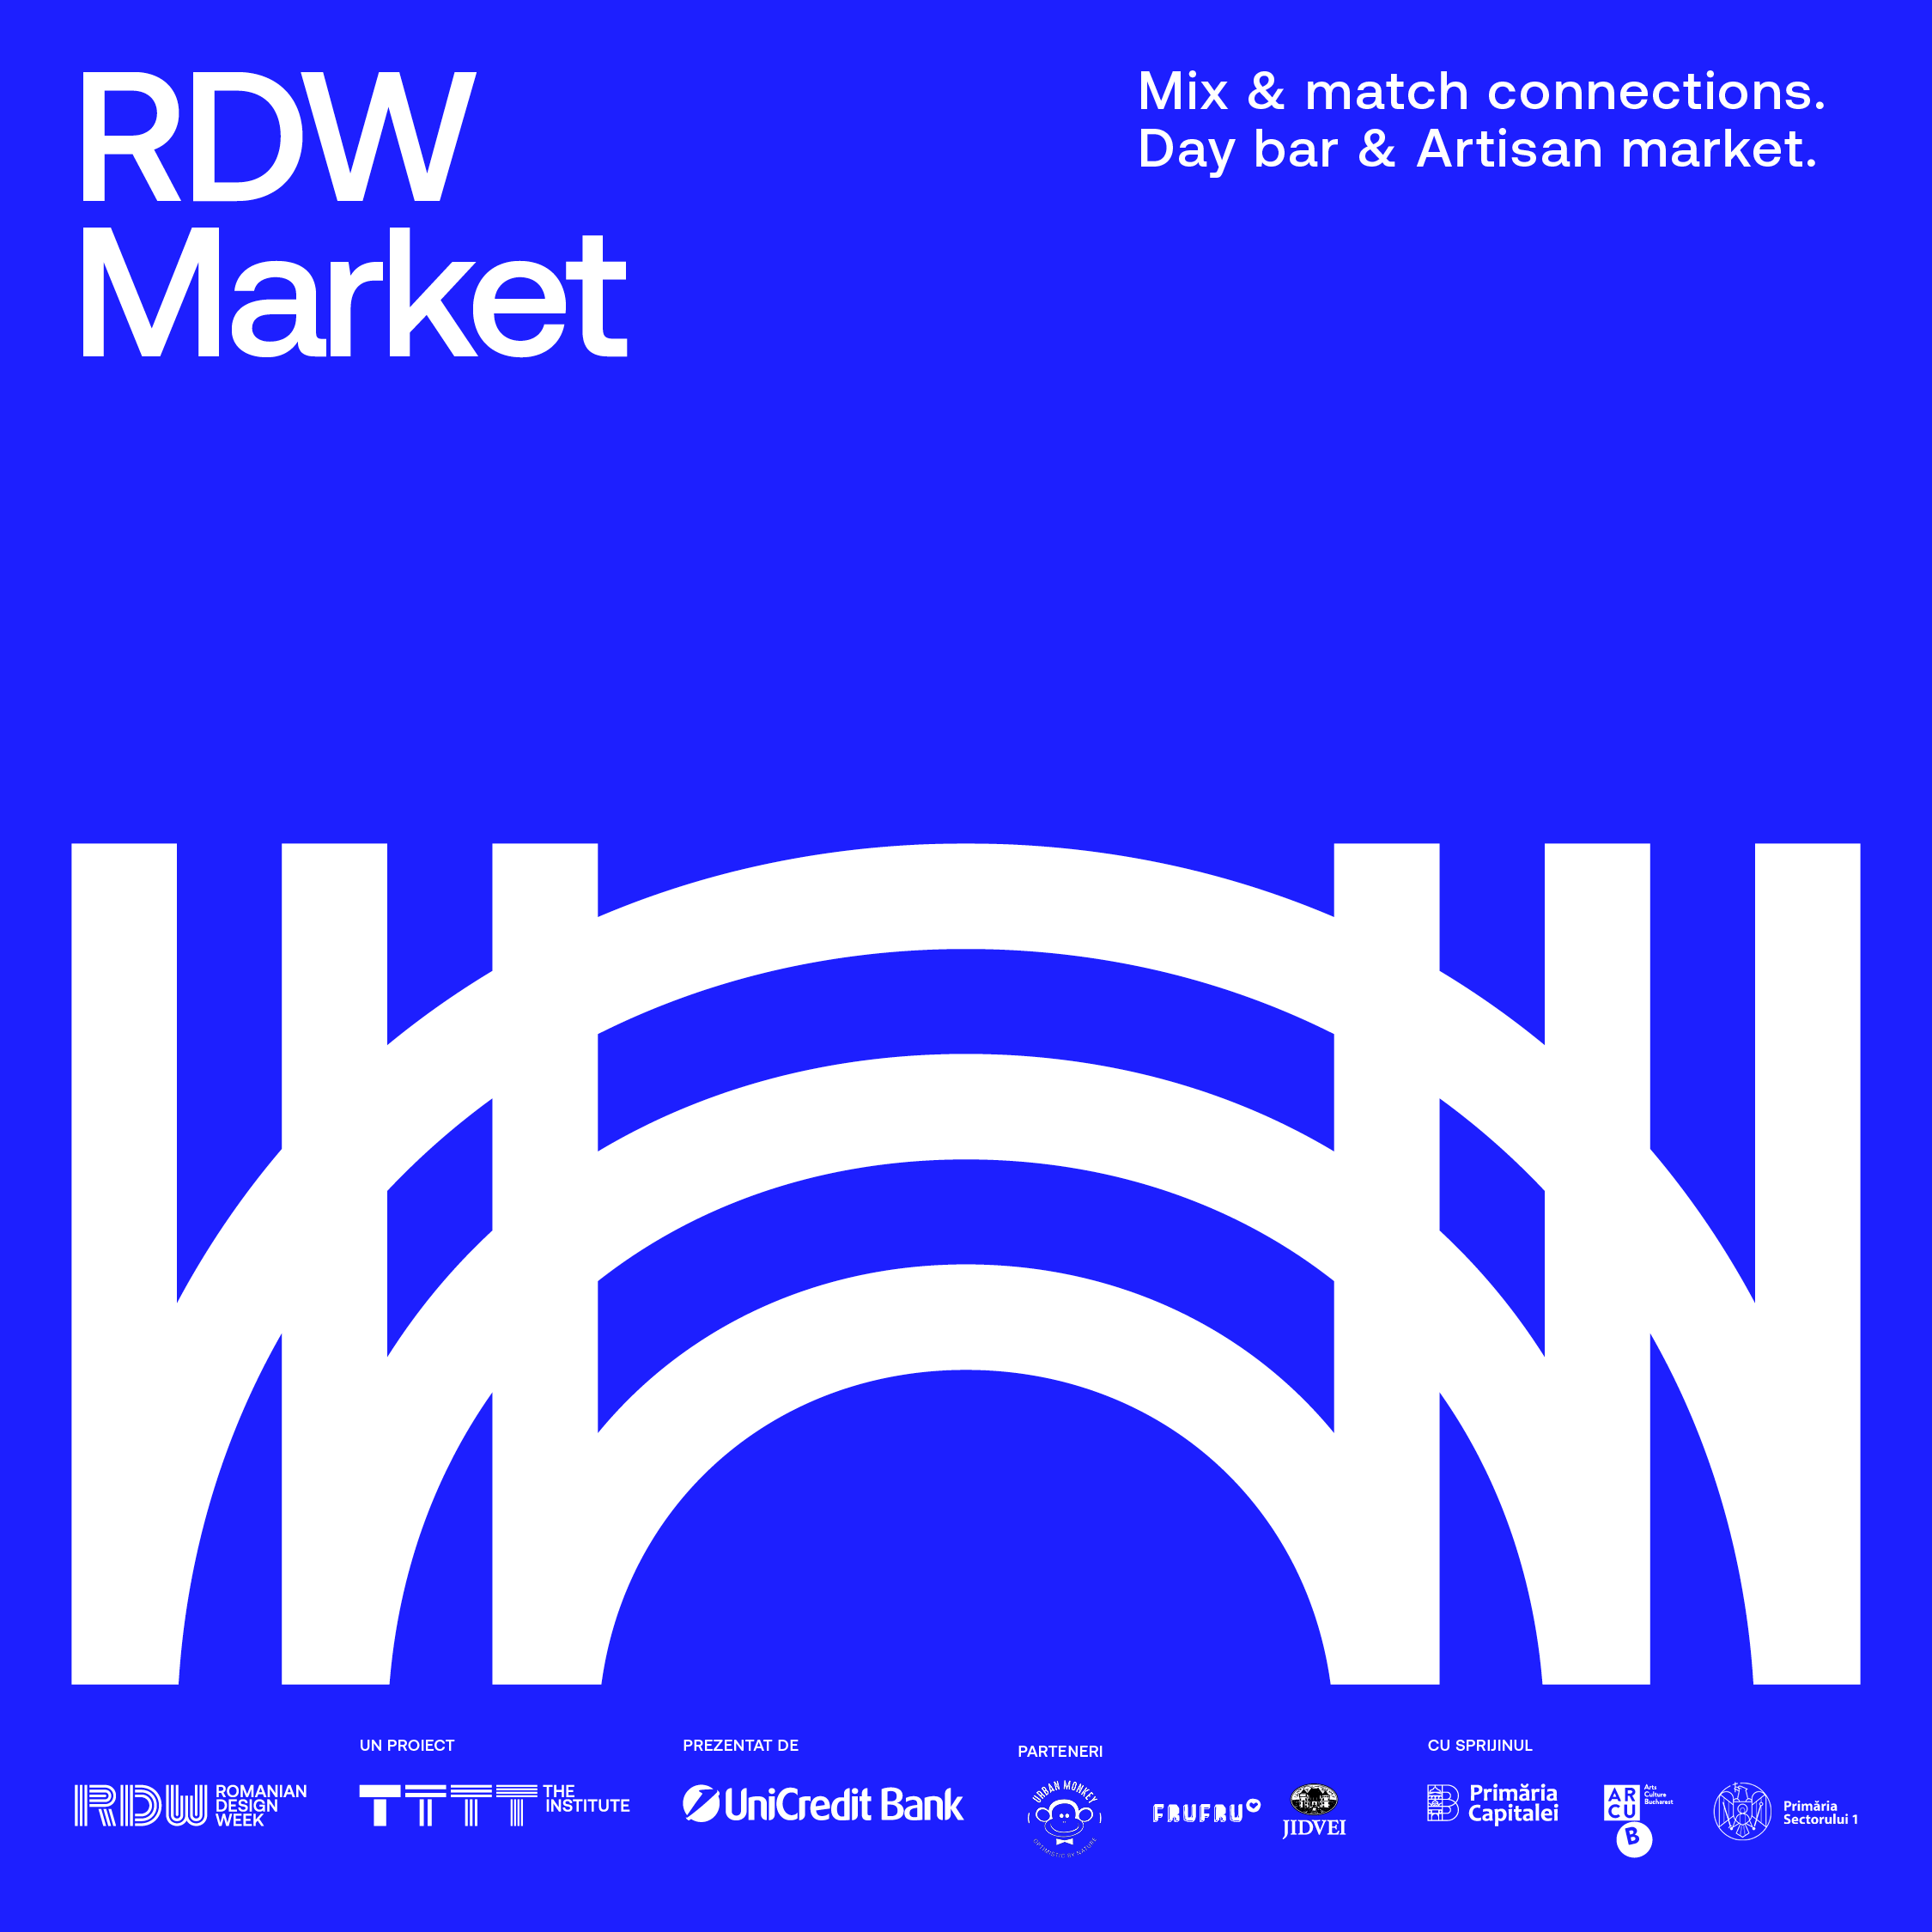 rdw market